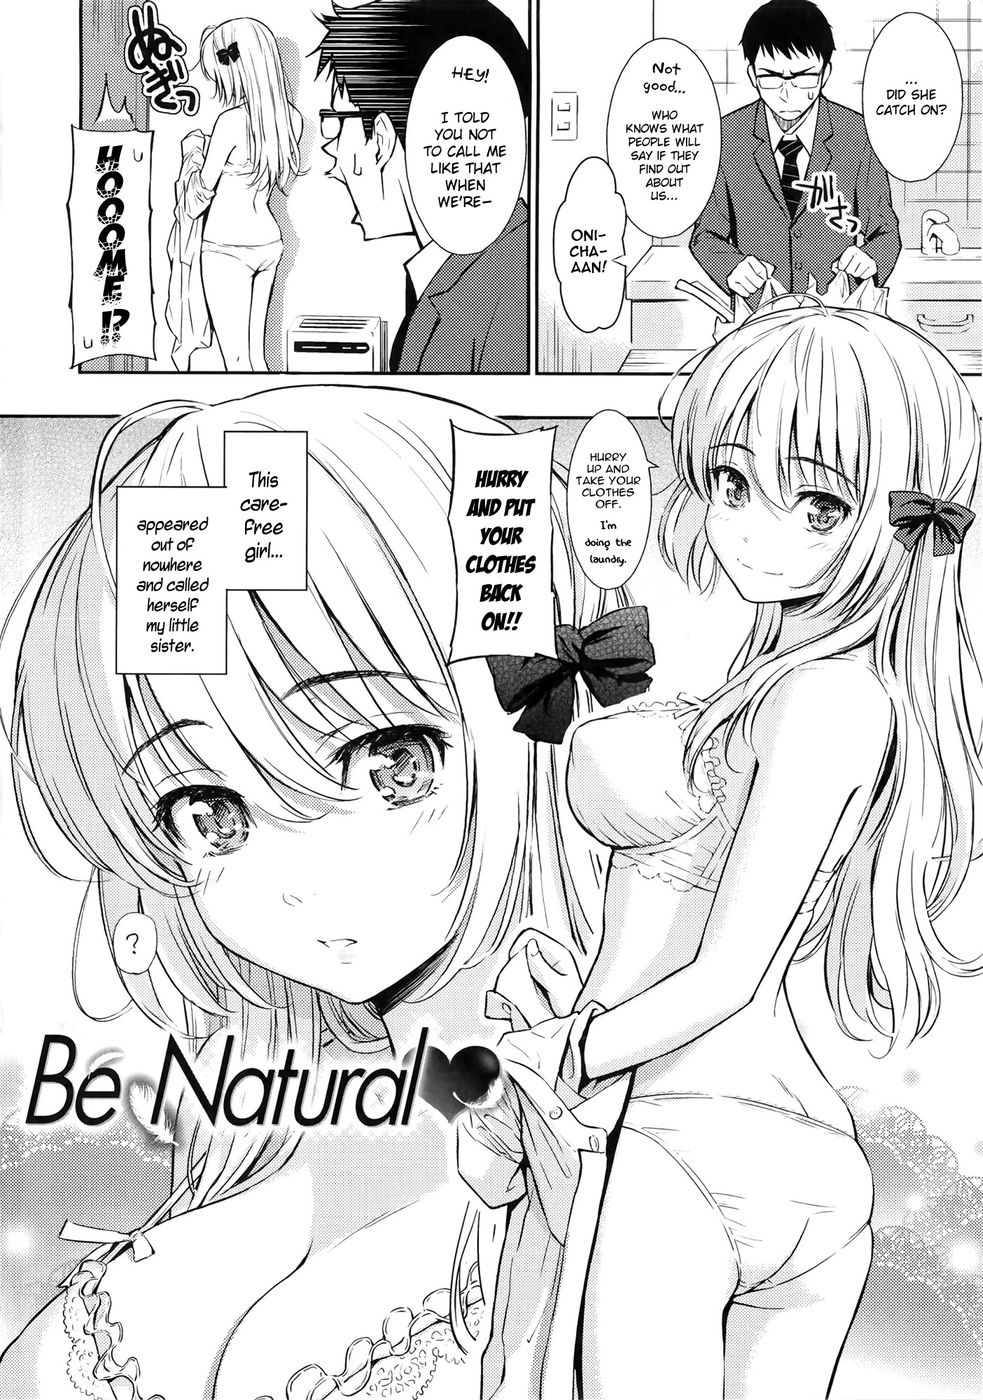 Hentai Manga Comic-Renai Sample 2-Chapter 4-Be Natural-2